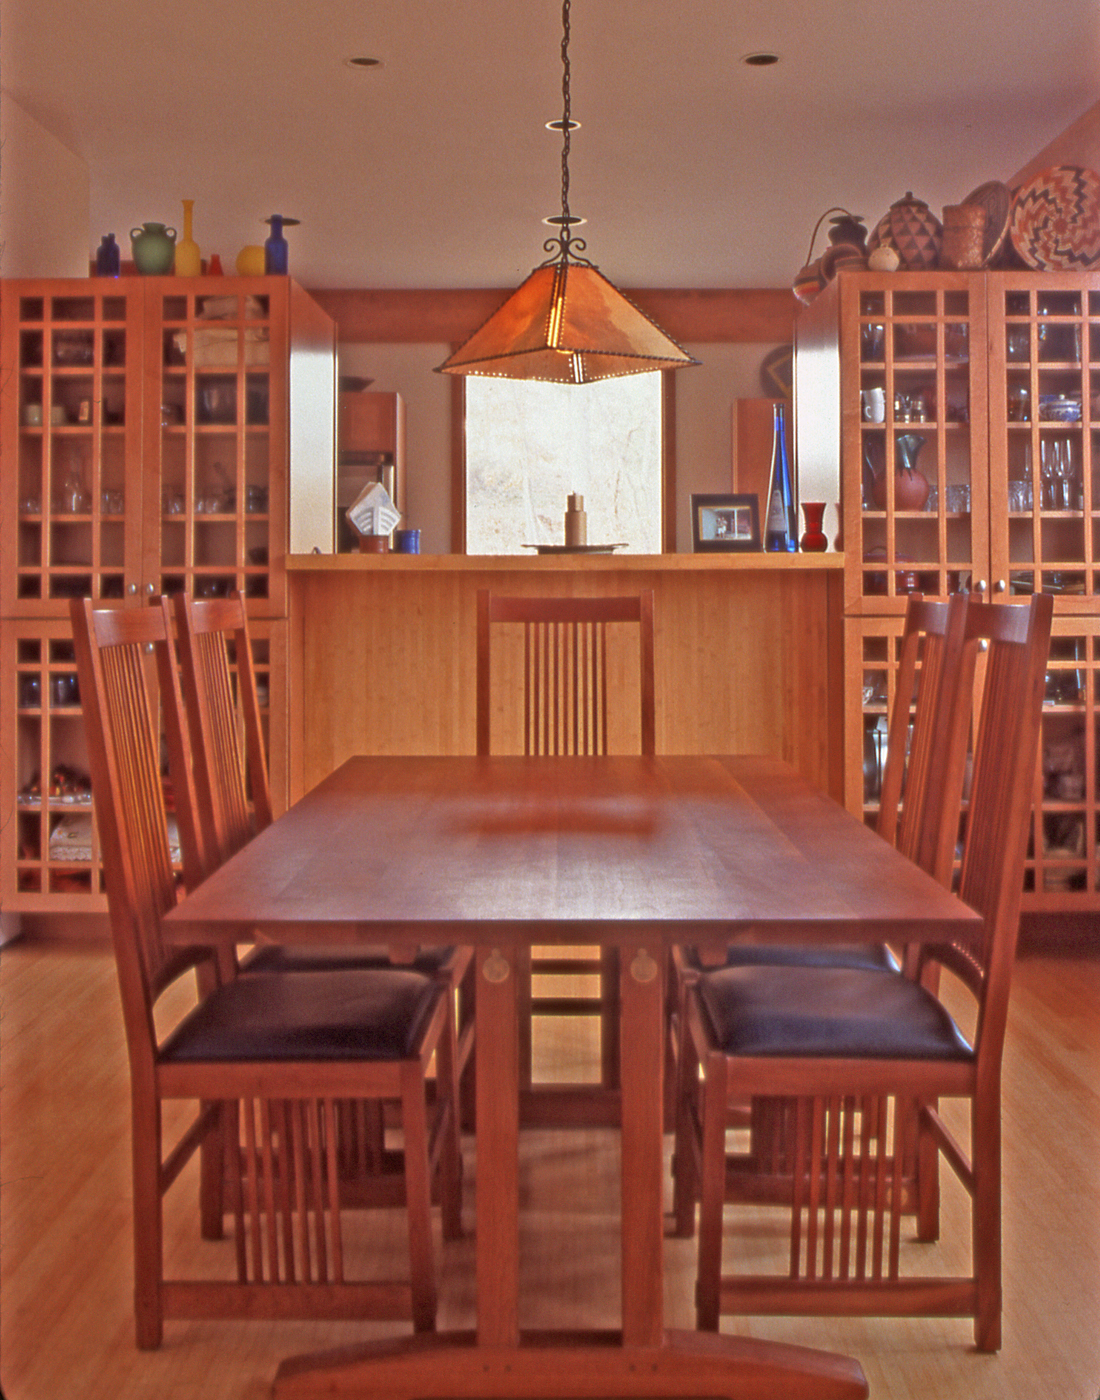 Interior-kitchen-table.jpg